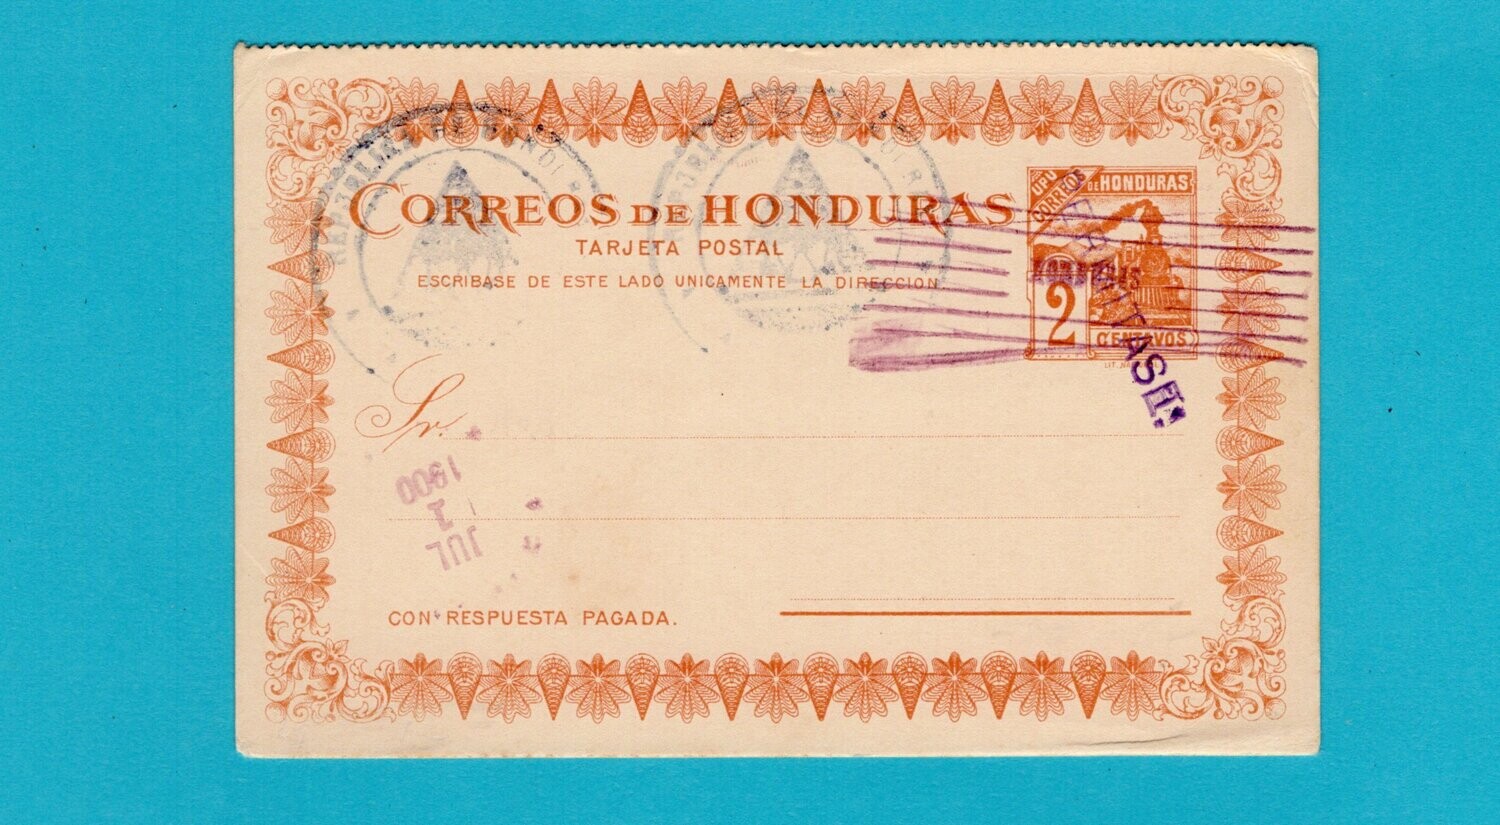 HONDURAS postal card 1900 with 